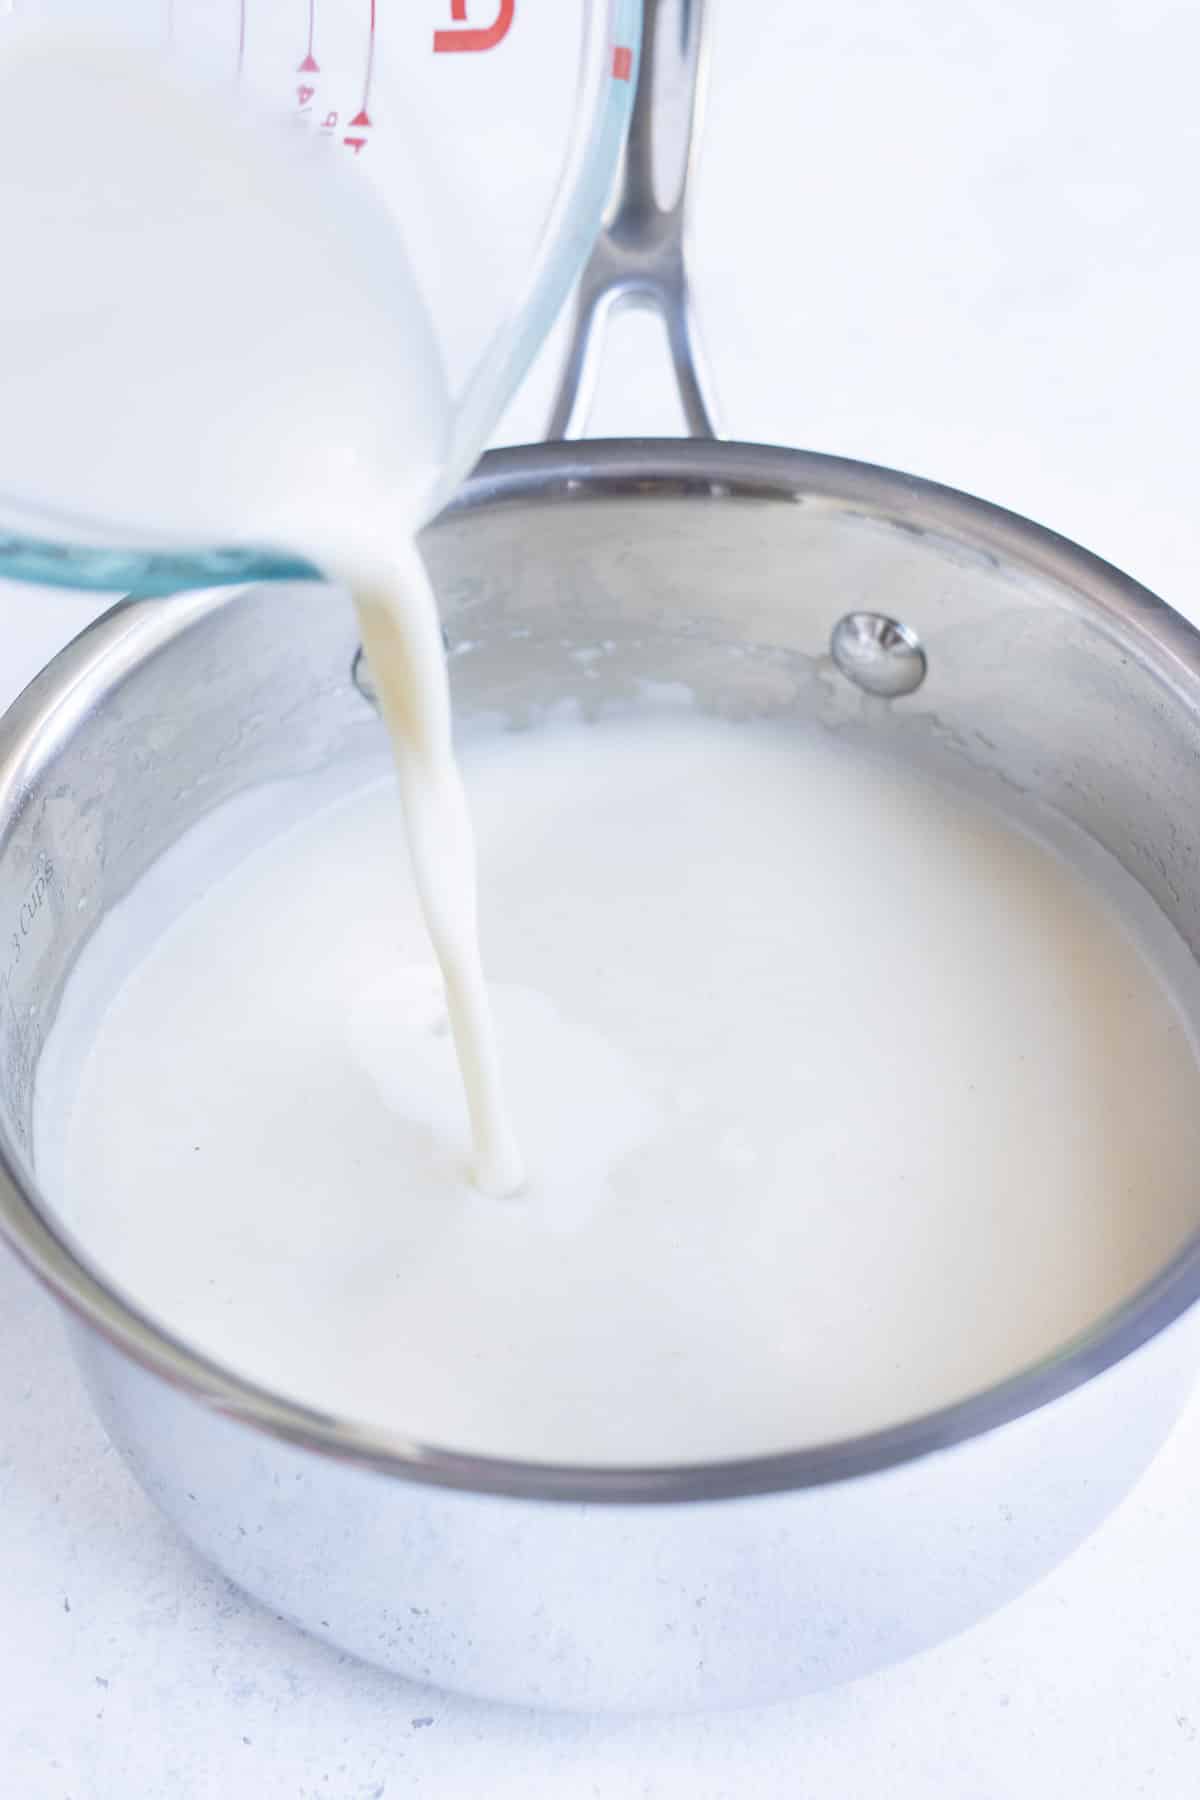 Milk is added to the gravy mixture.